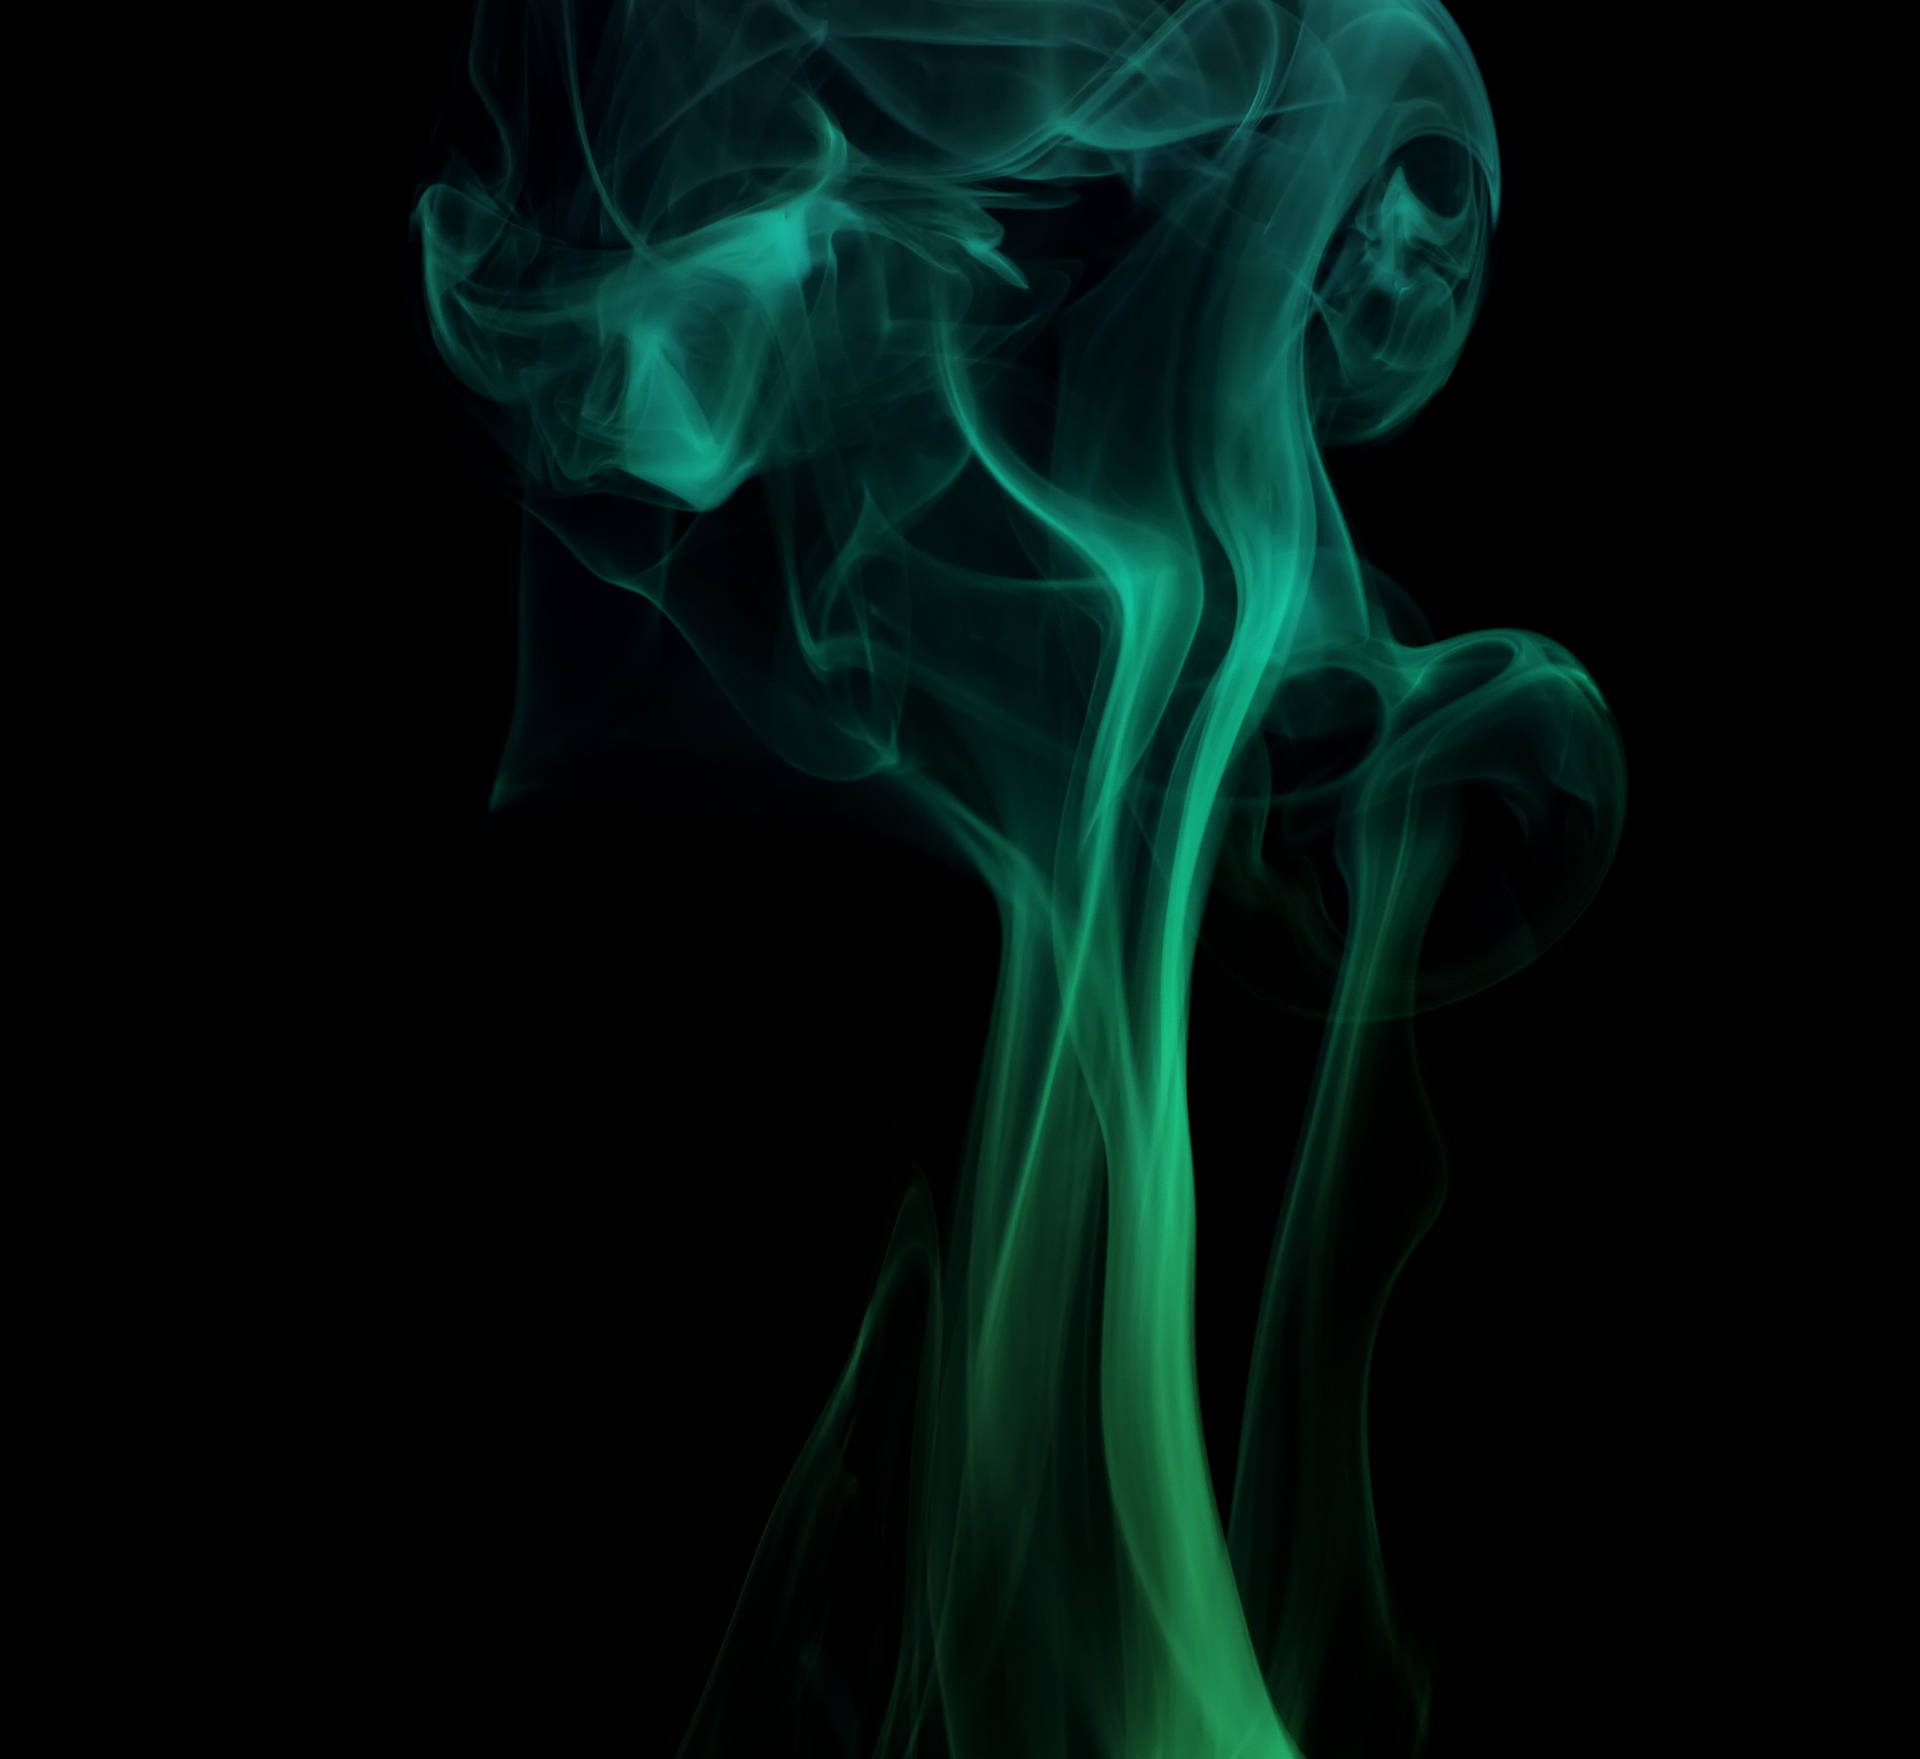 Dark Green Smoke In Black Background